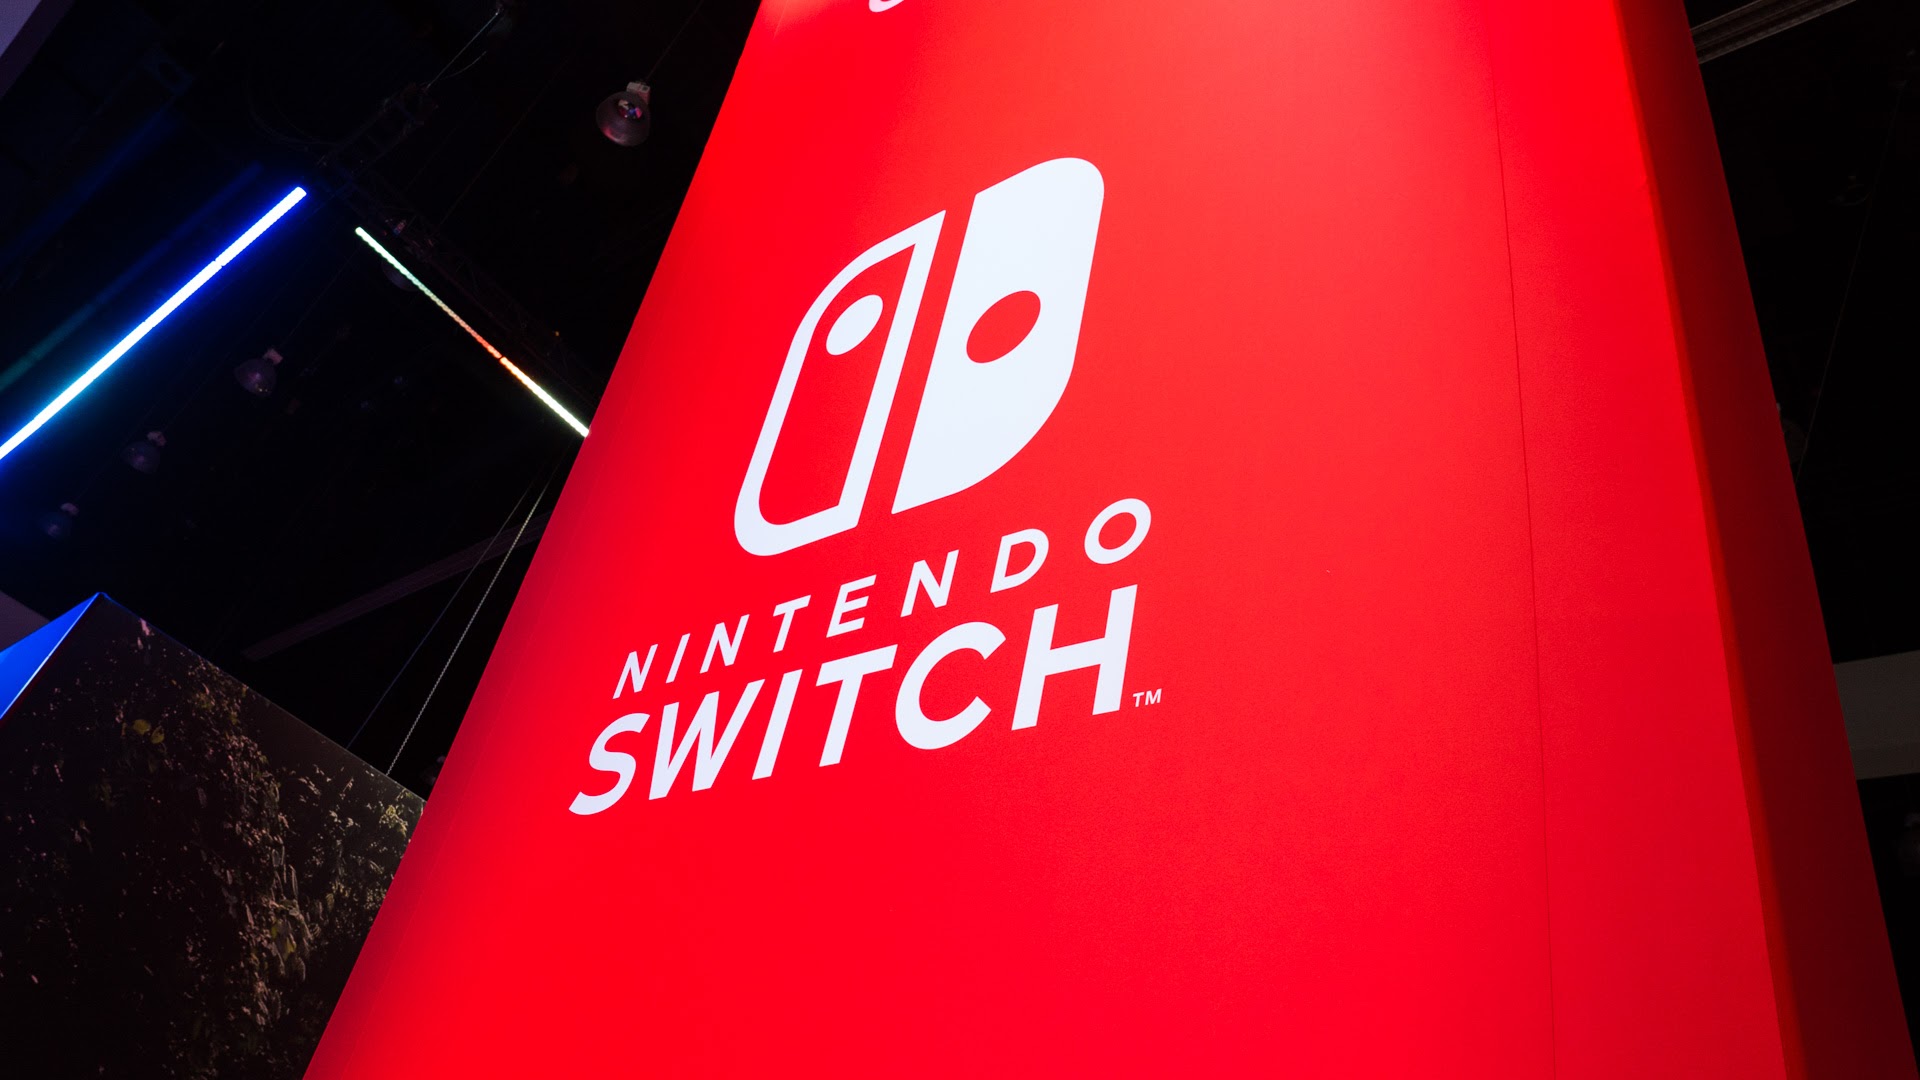 nintendo switch E3 2017